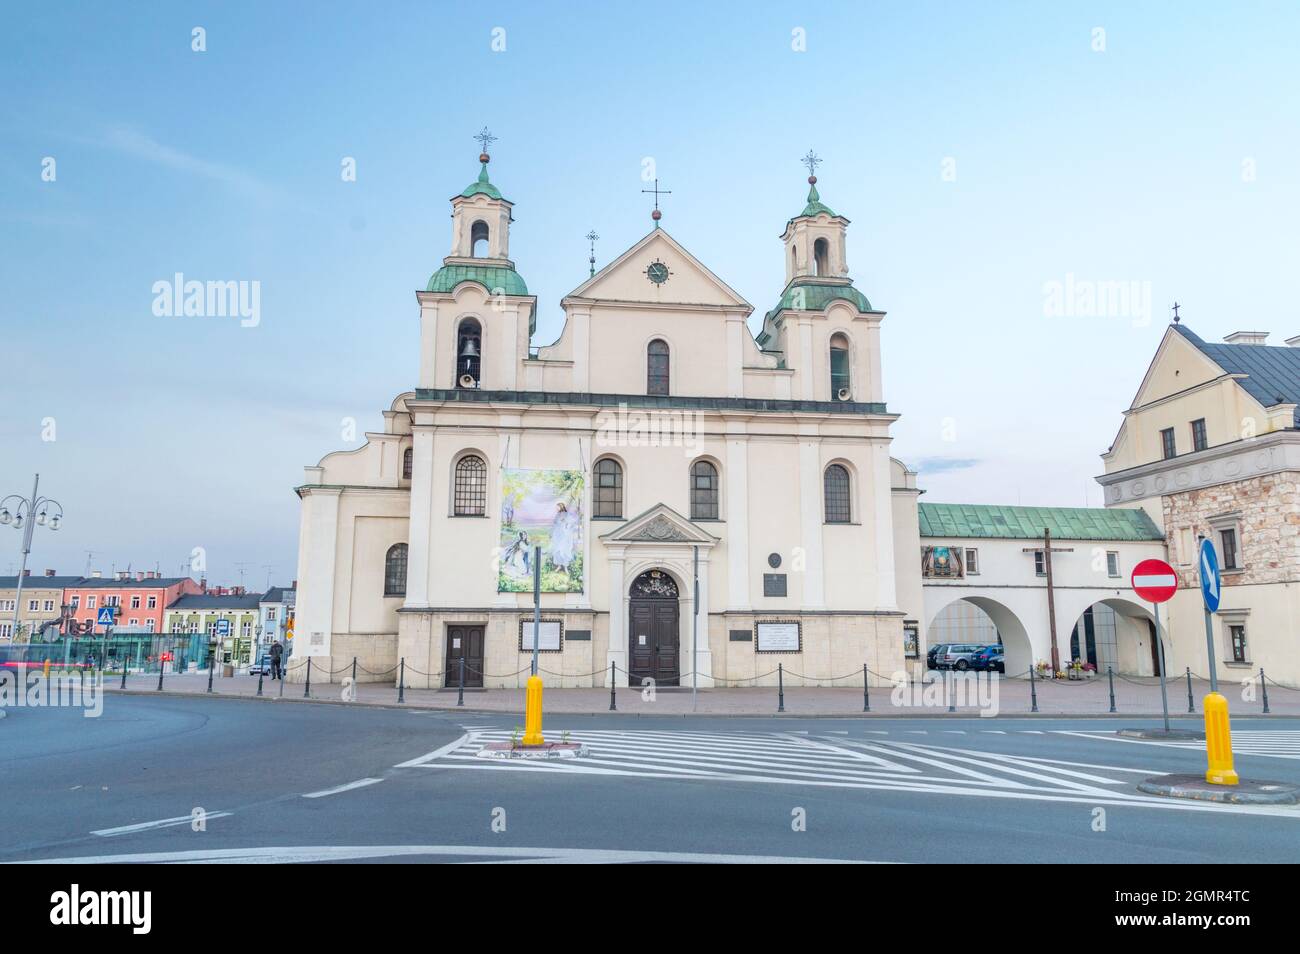 Czestochowa, Poland - June 6, 2021: Saint Sigismund church at dusk. Stock Photo